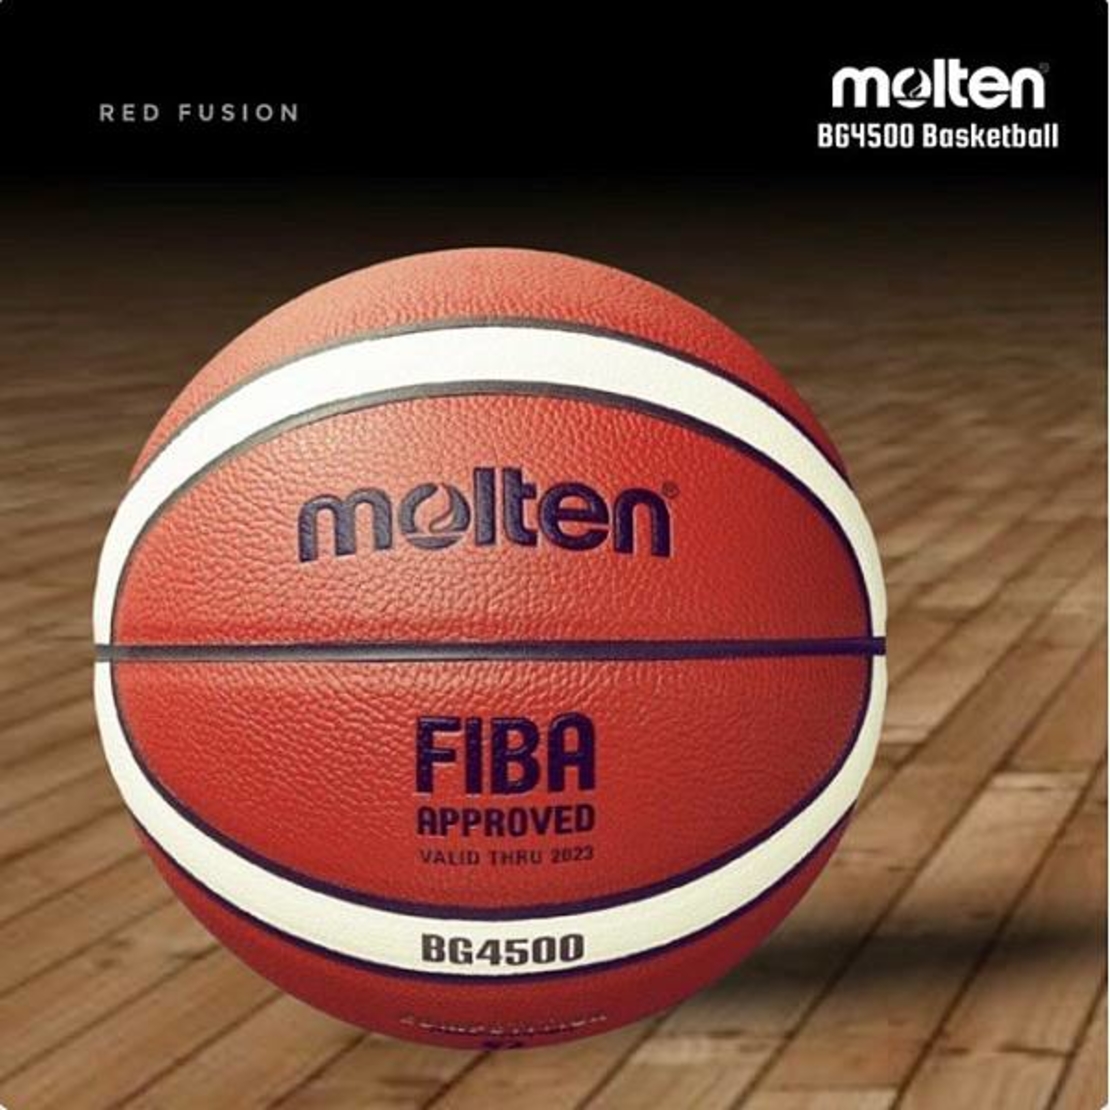 כדור כדורסל עור מידה 7 מולטן Molten BG4500